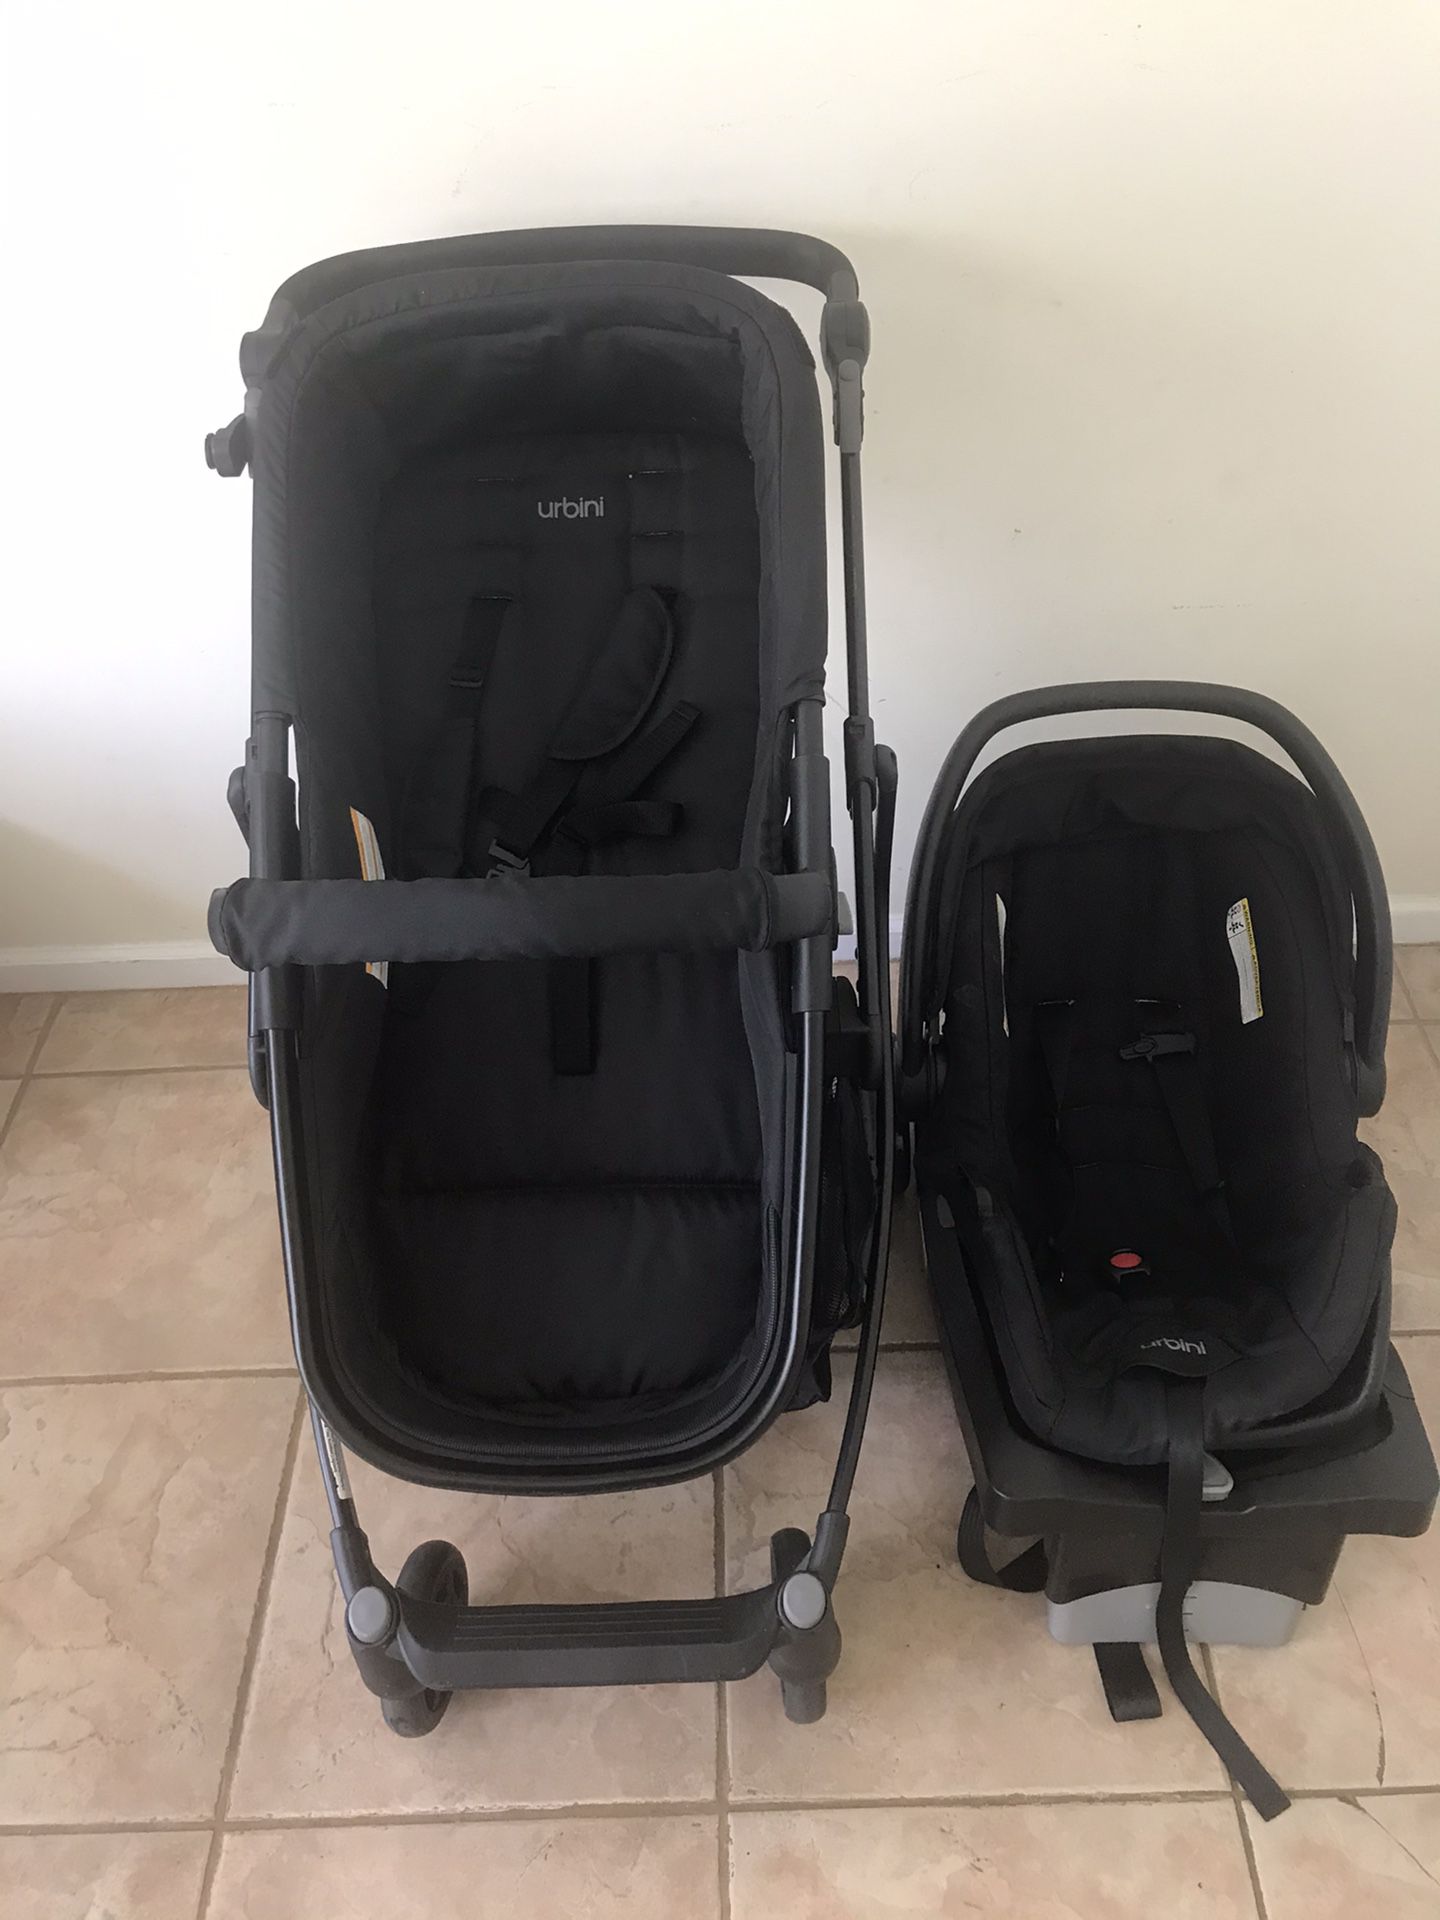 Urbini stroller and car seat